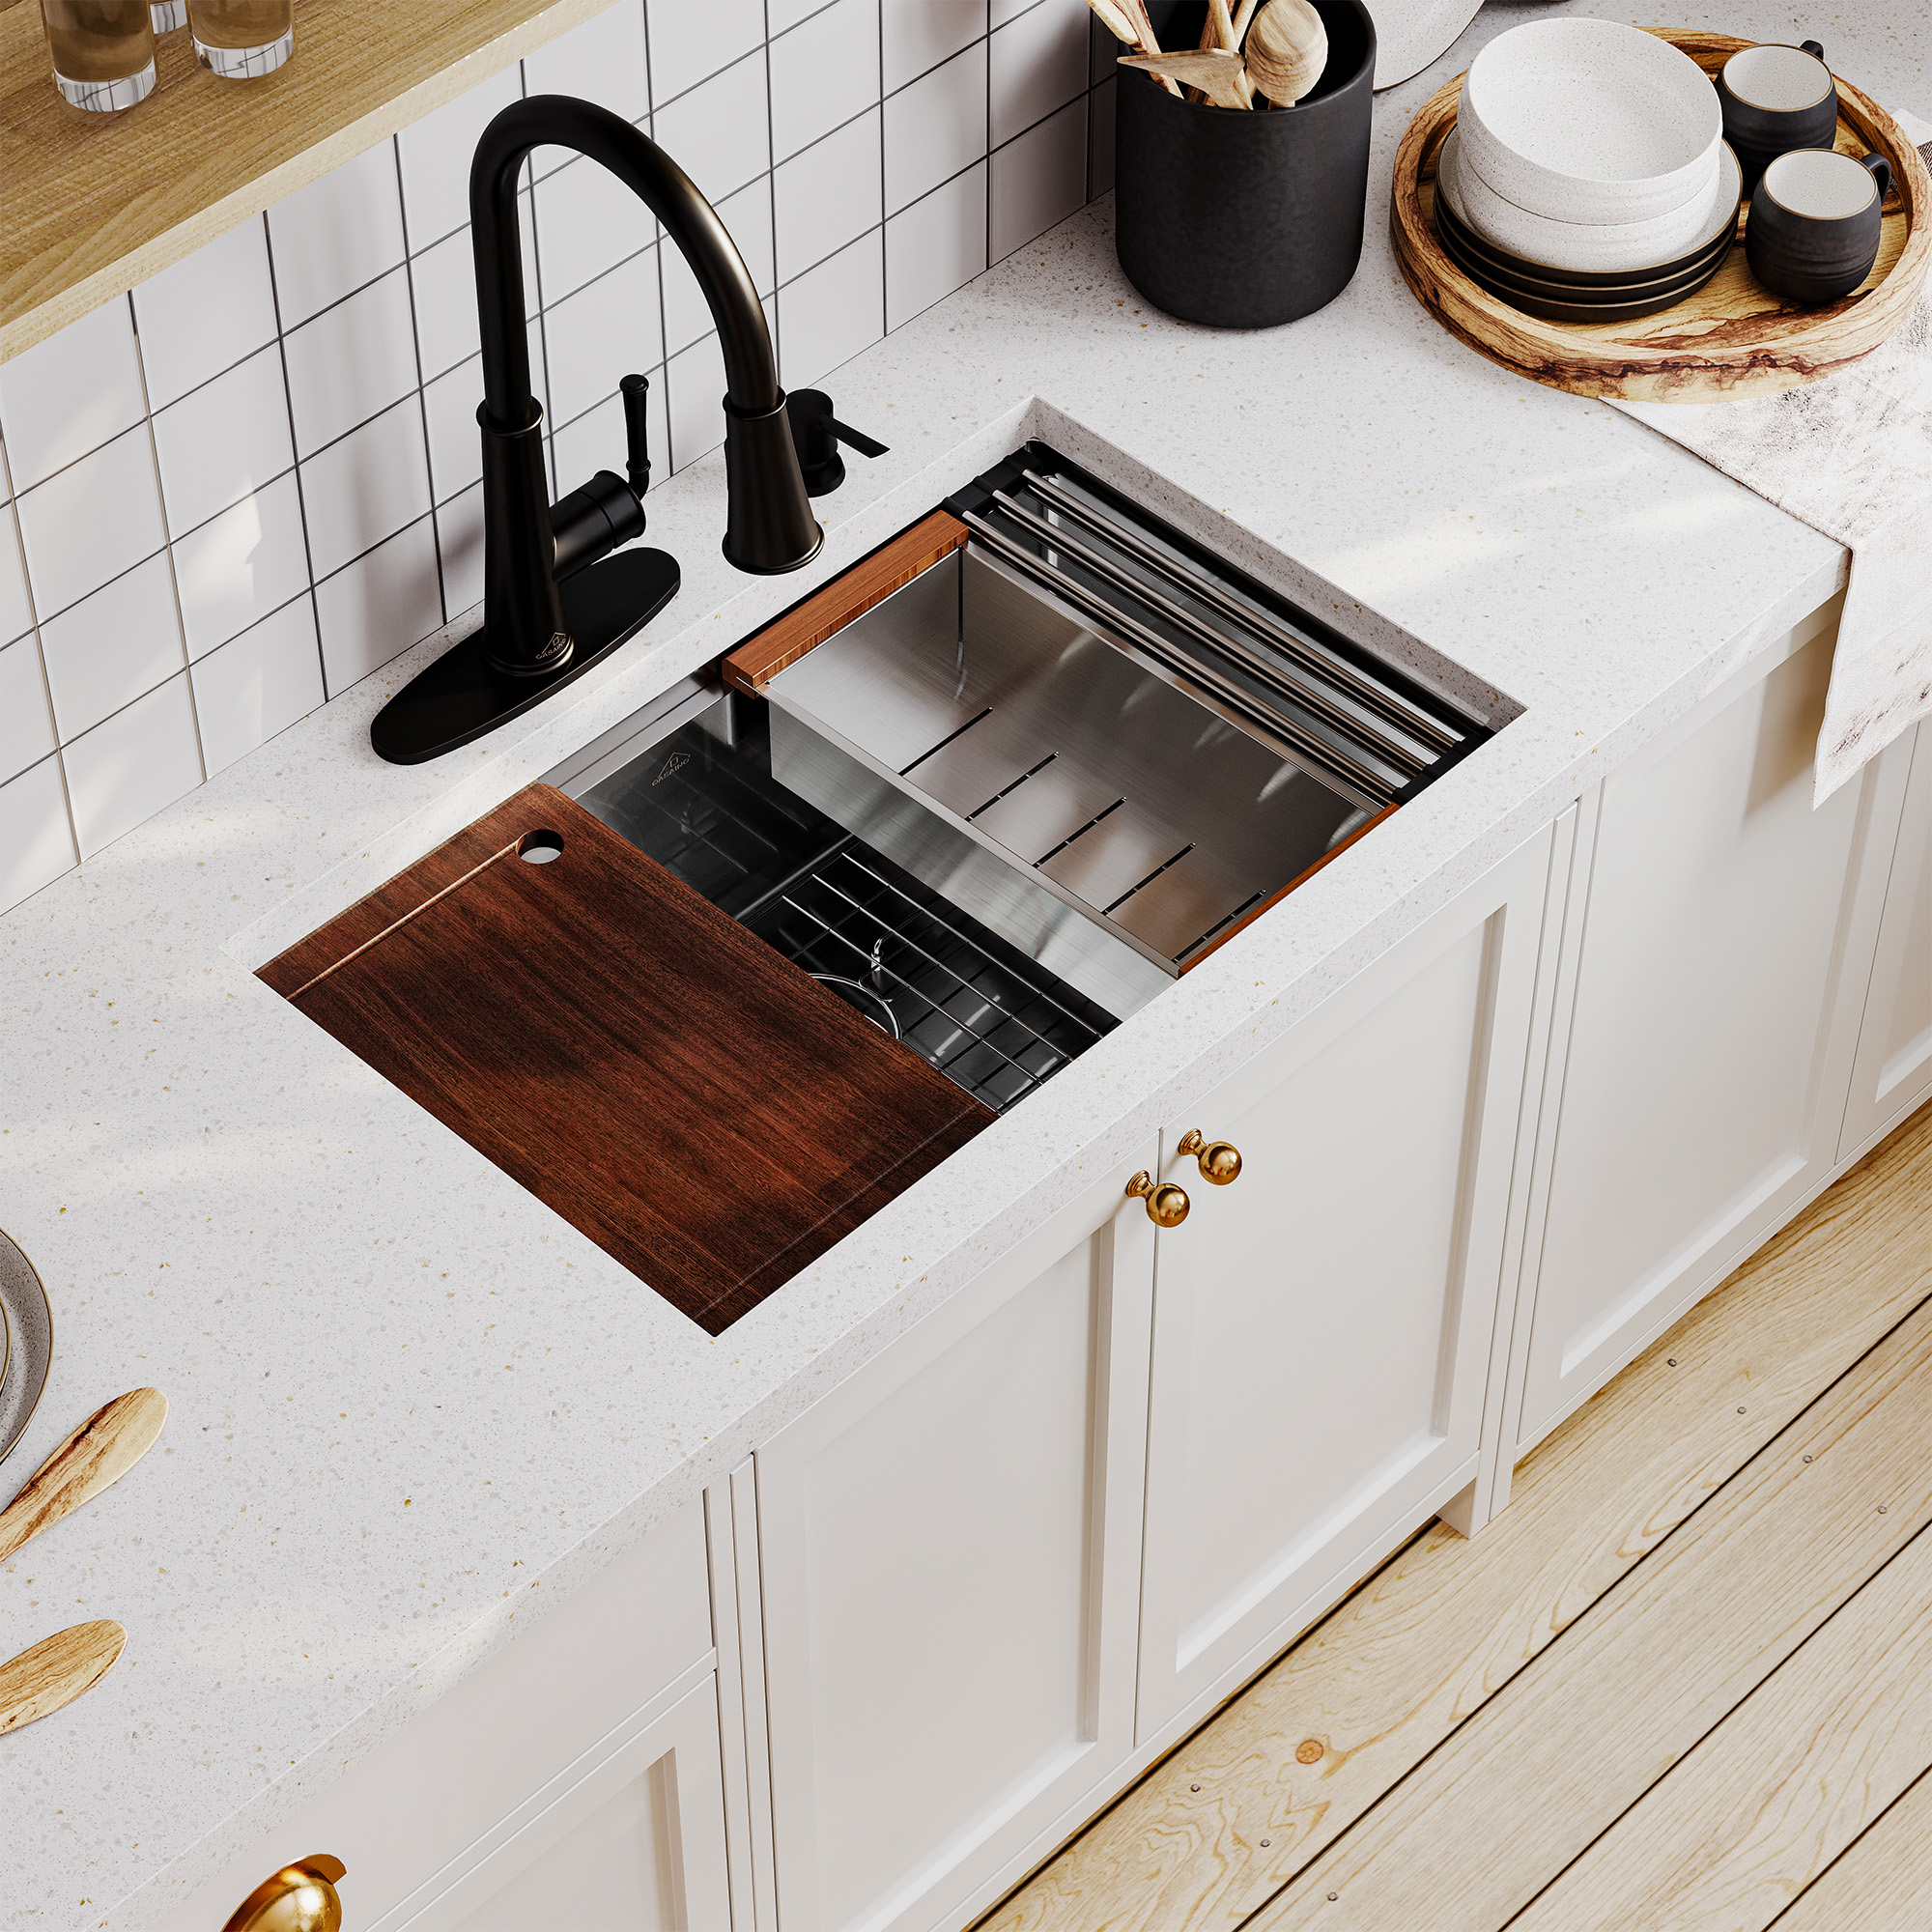 Casainc Undermount Stainless Steel 30/32 inch Single Bowl Kitchen Sink in Nano Brushed